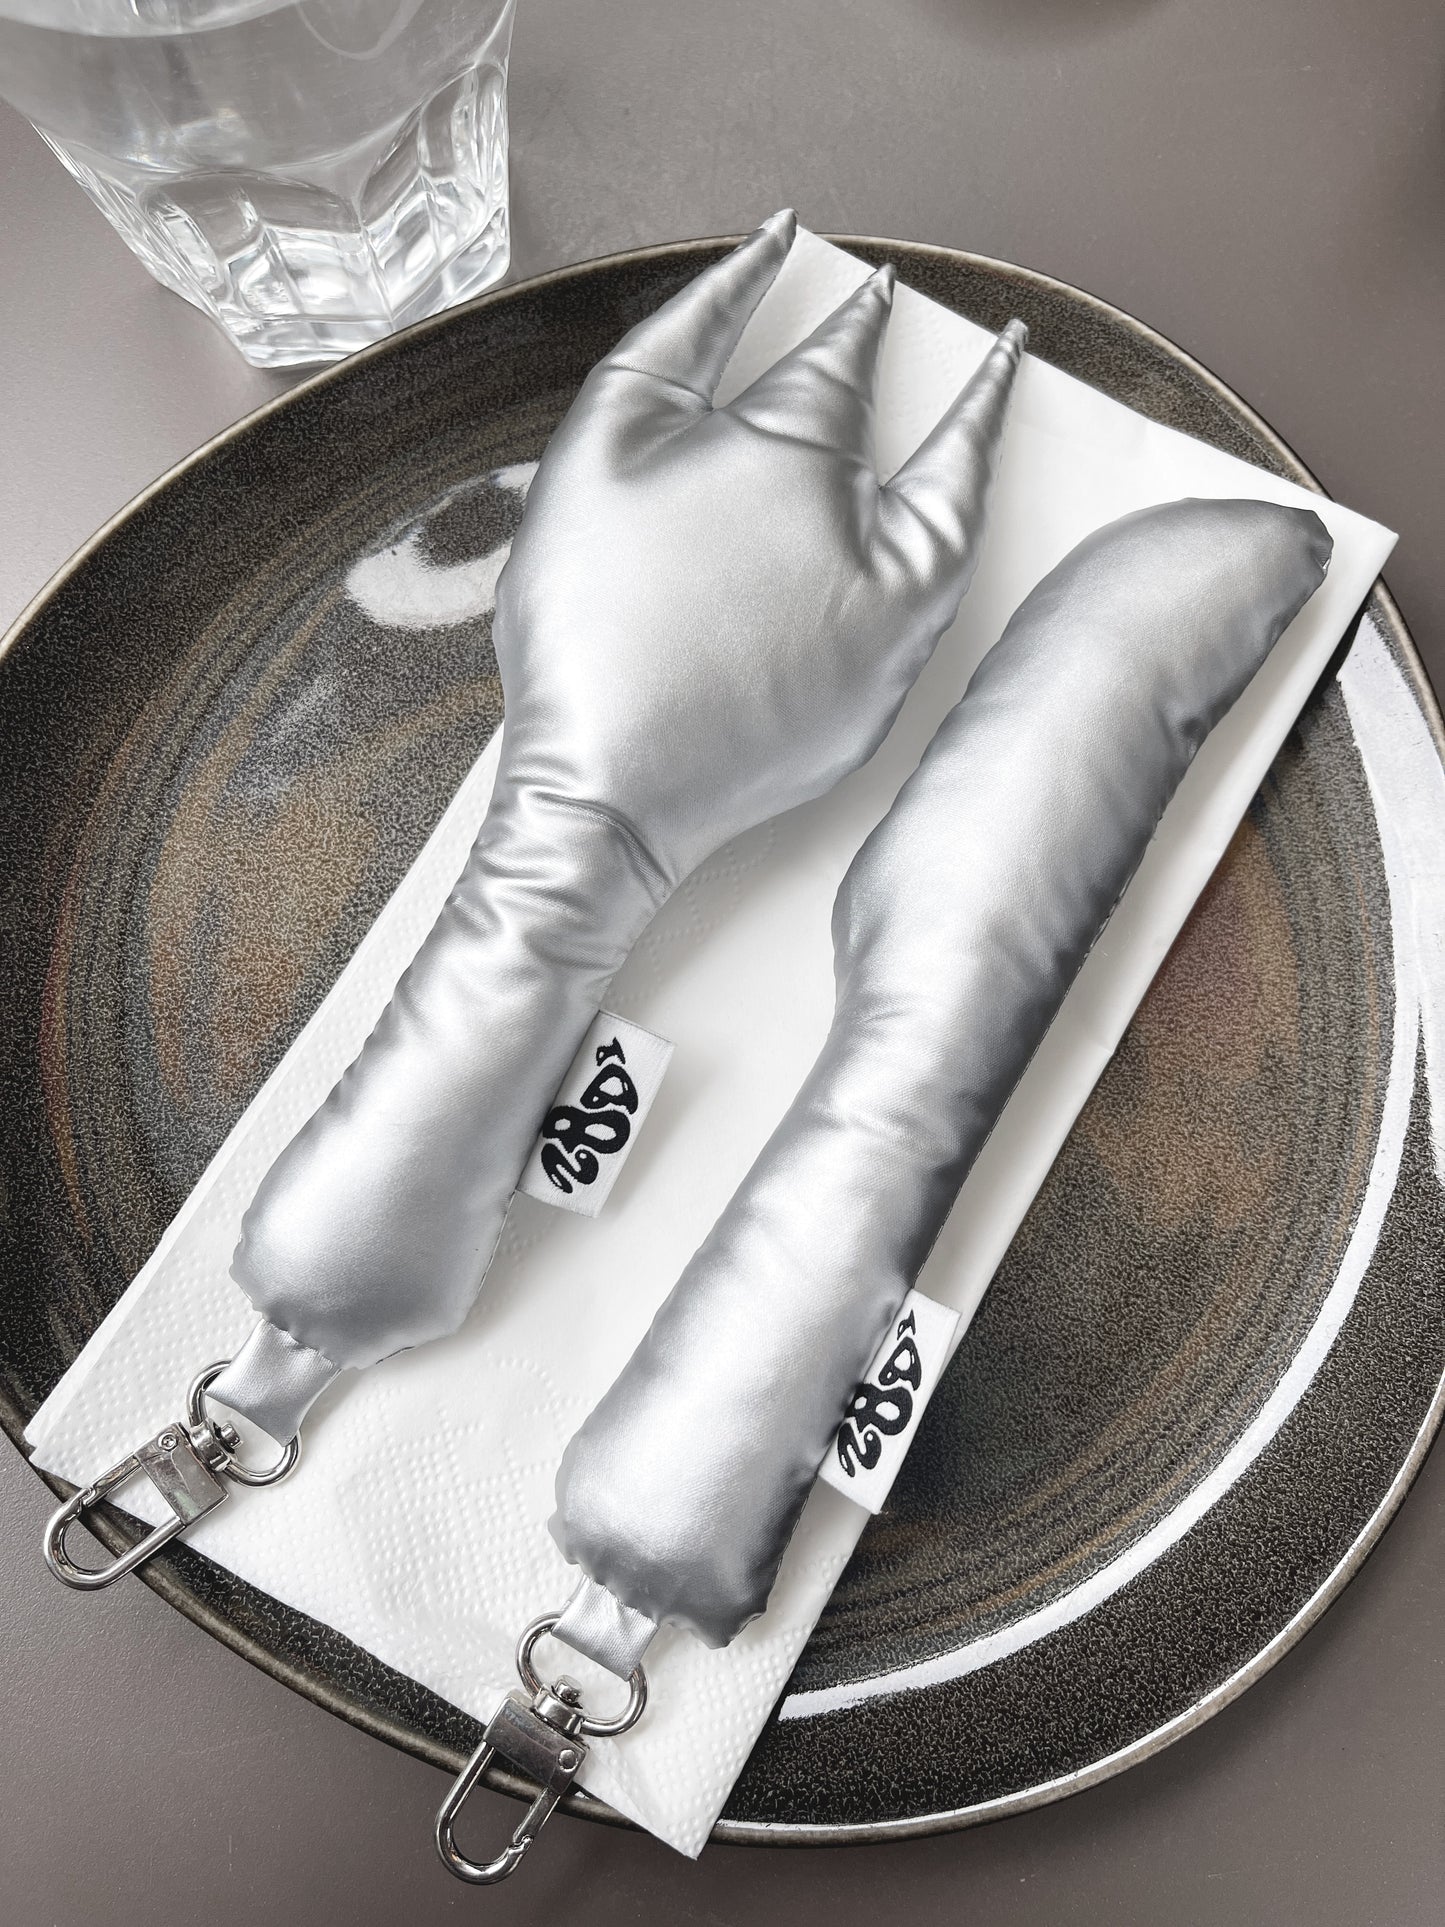 “Knife & Fork” Bag Charms